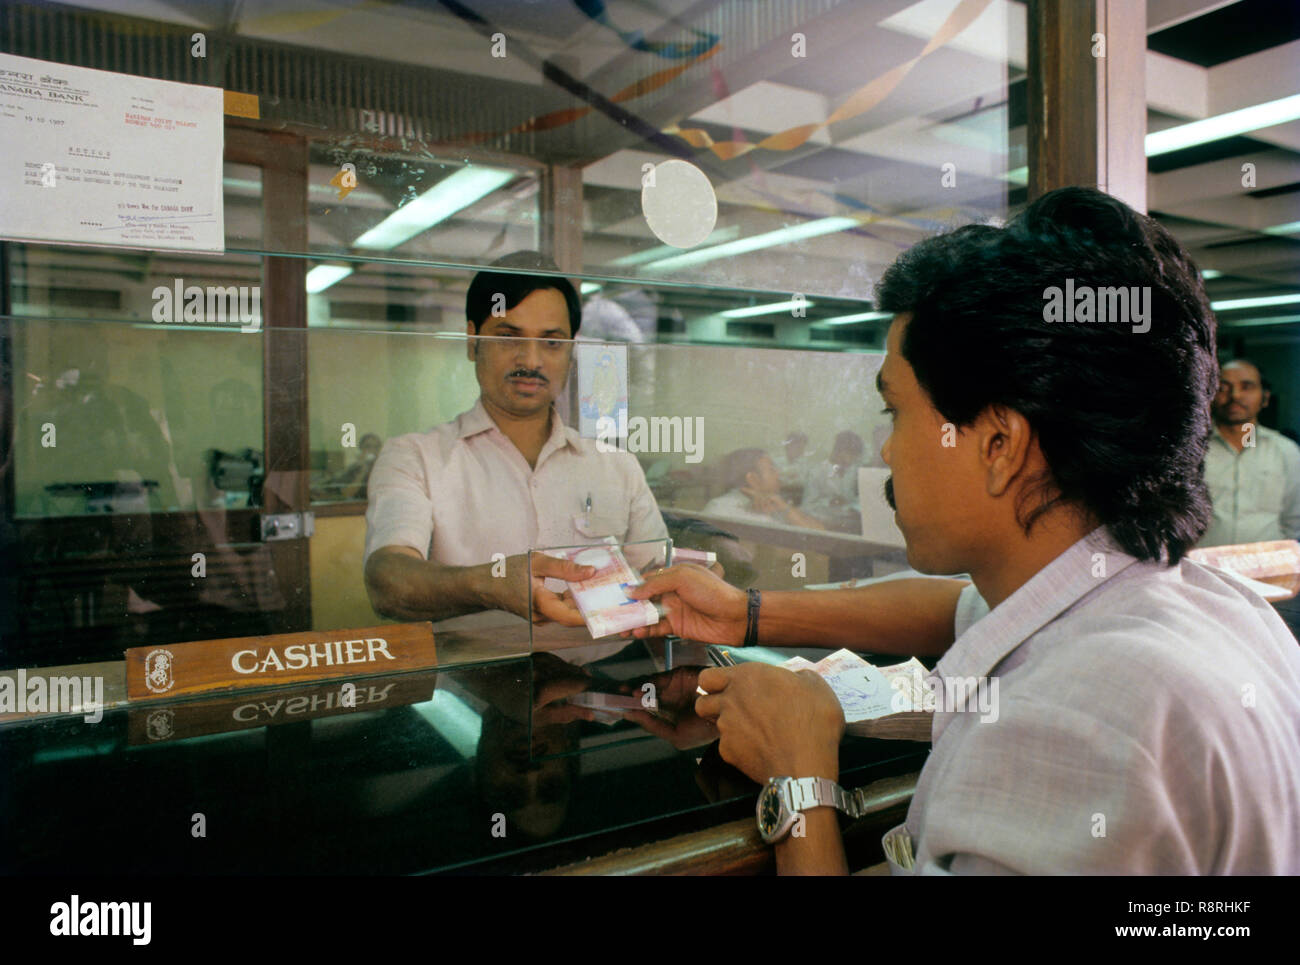 bank cashier giving cash to customer bank counter bangalore bengaluru karnataka india asia indian asian R8RHKF